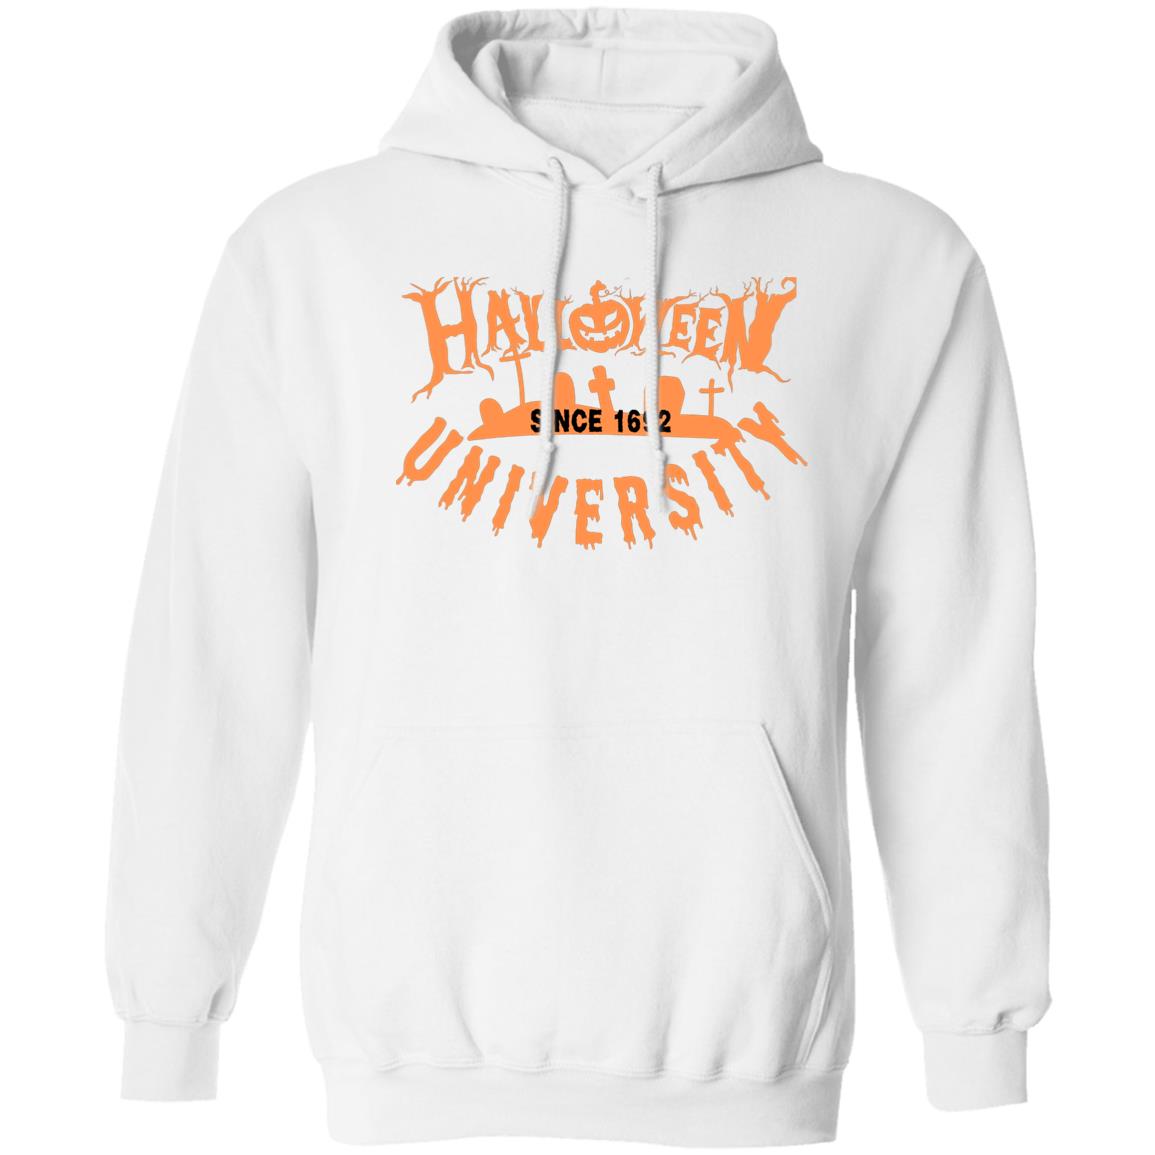 Halloween University Since 1692 T Shirt (2) Halloween University Hoodie Sweatshirt